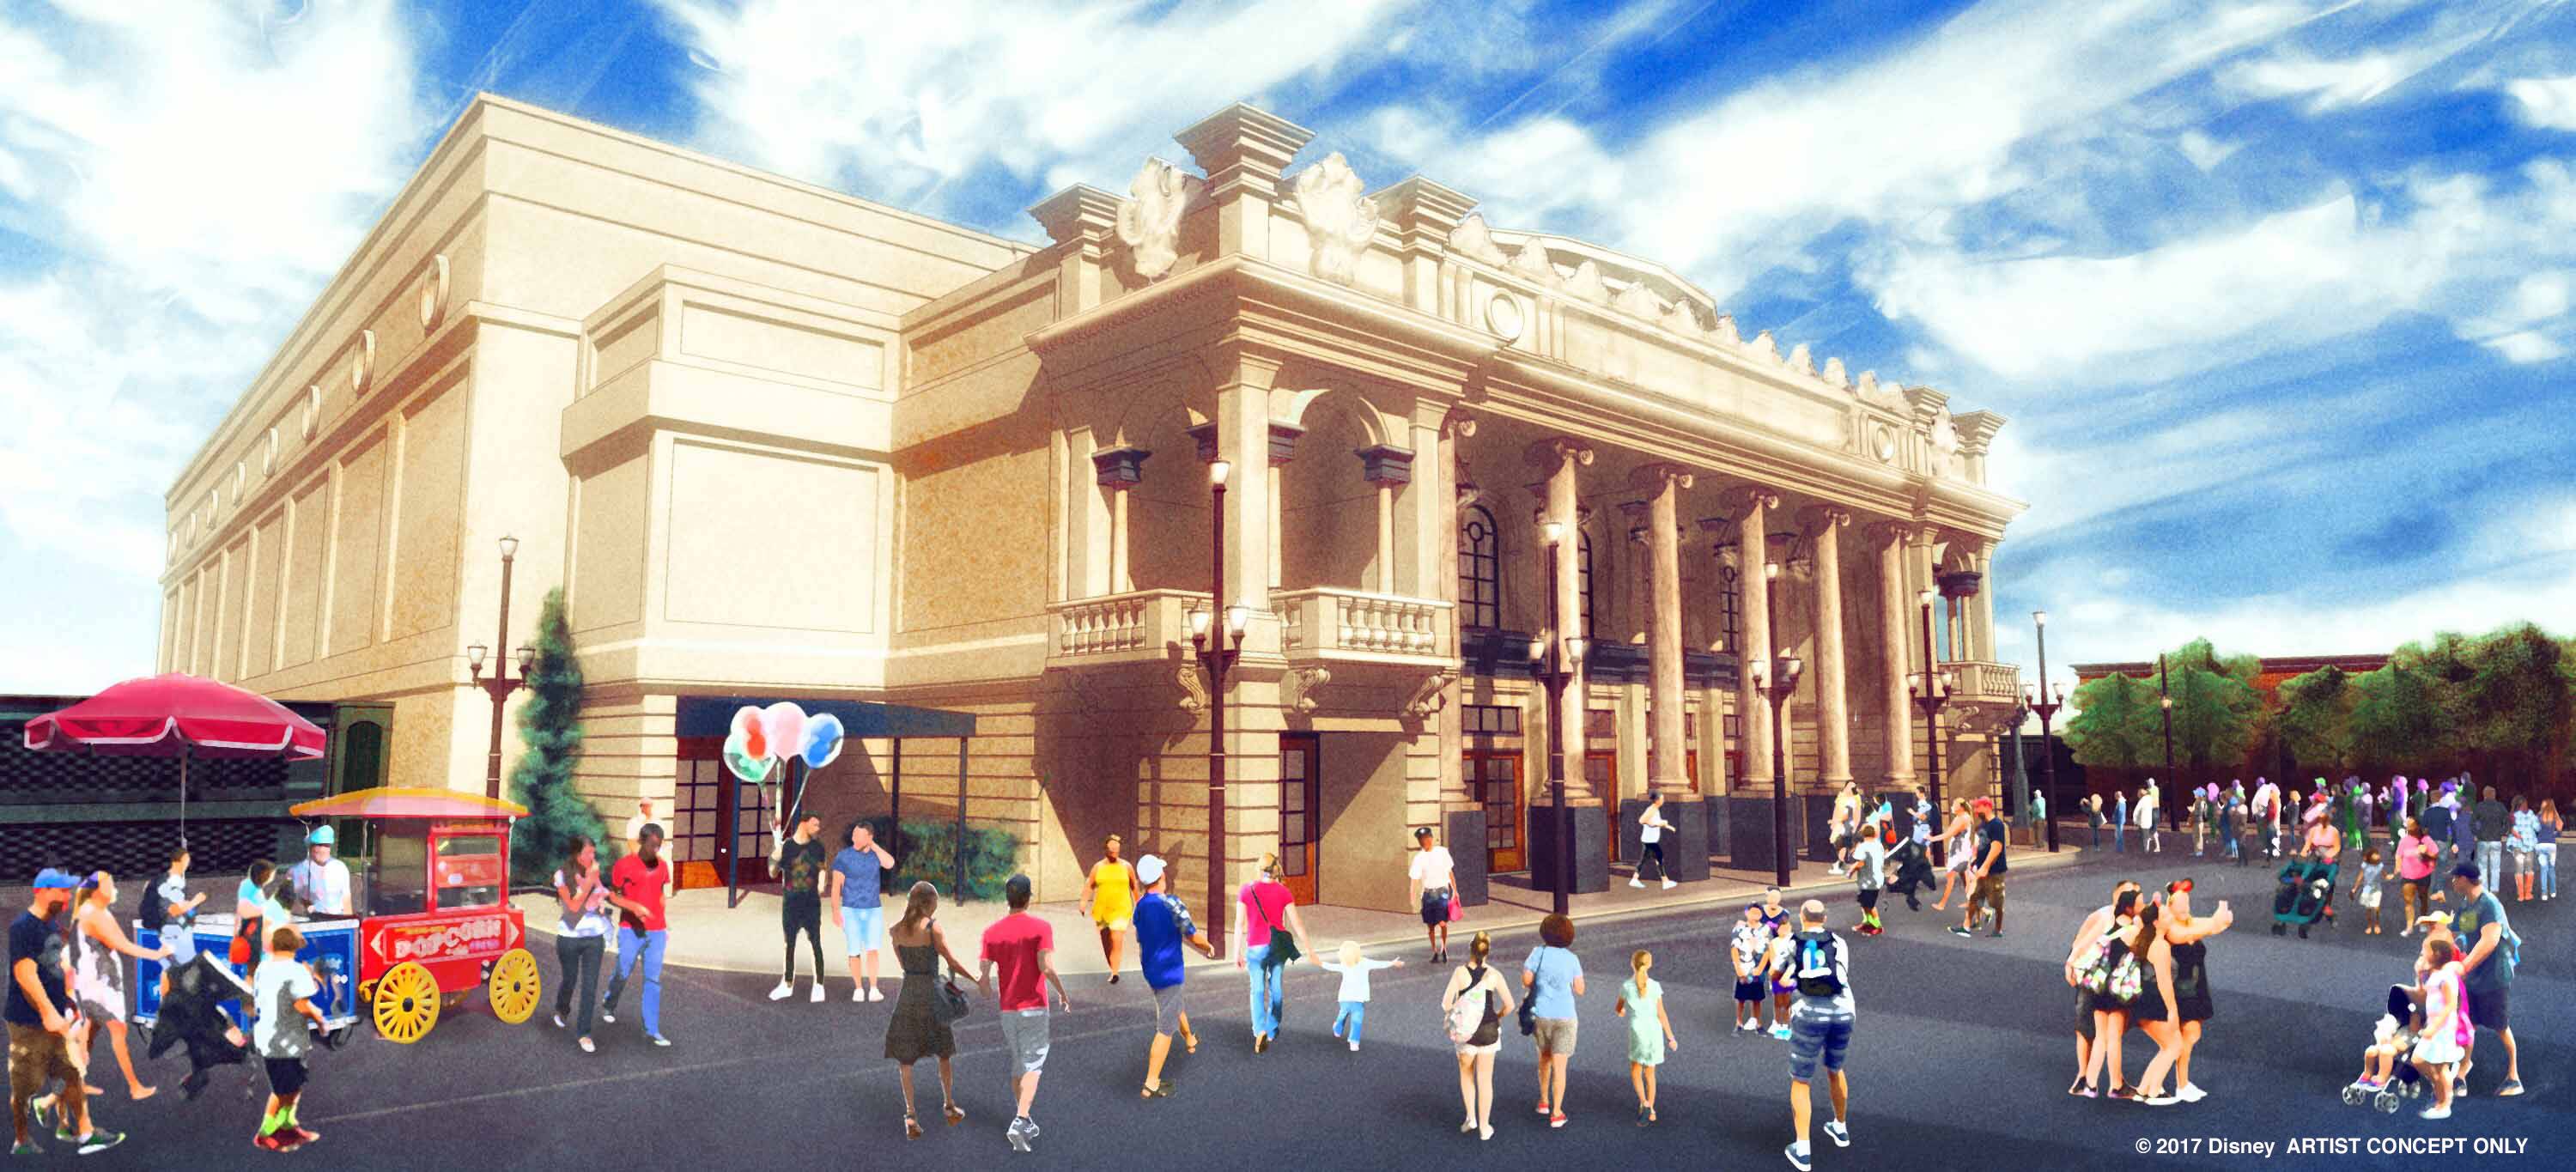 The Magic Kingdom's Main Street U.S.A. Theater project cancelled?